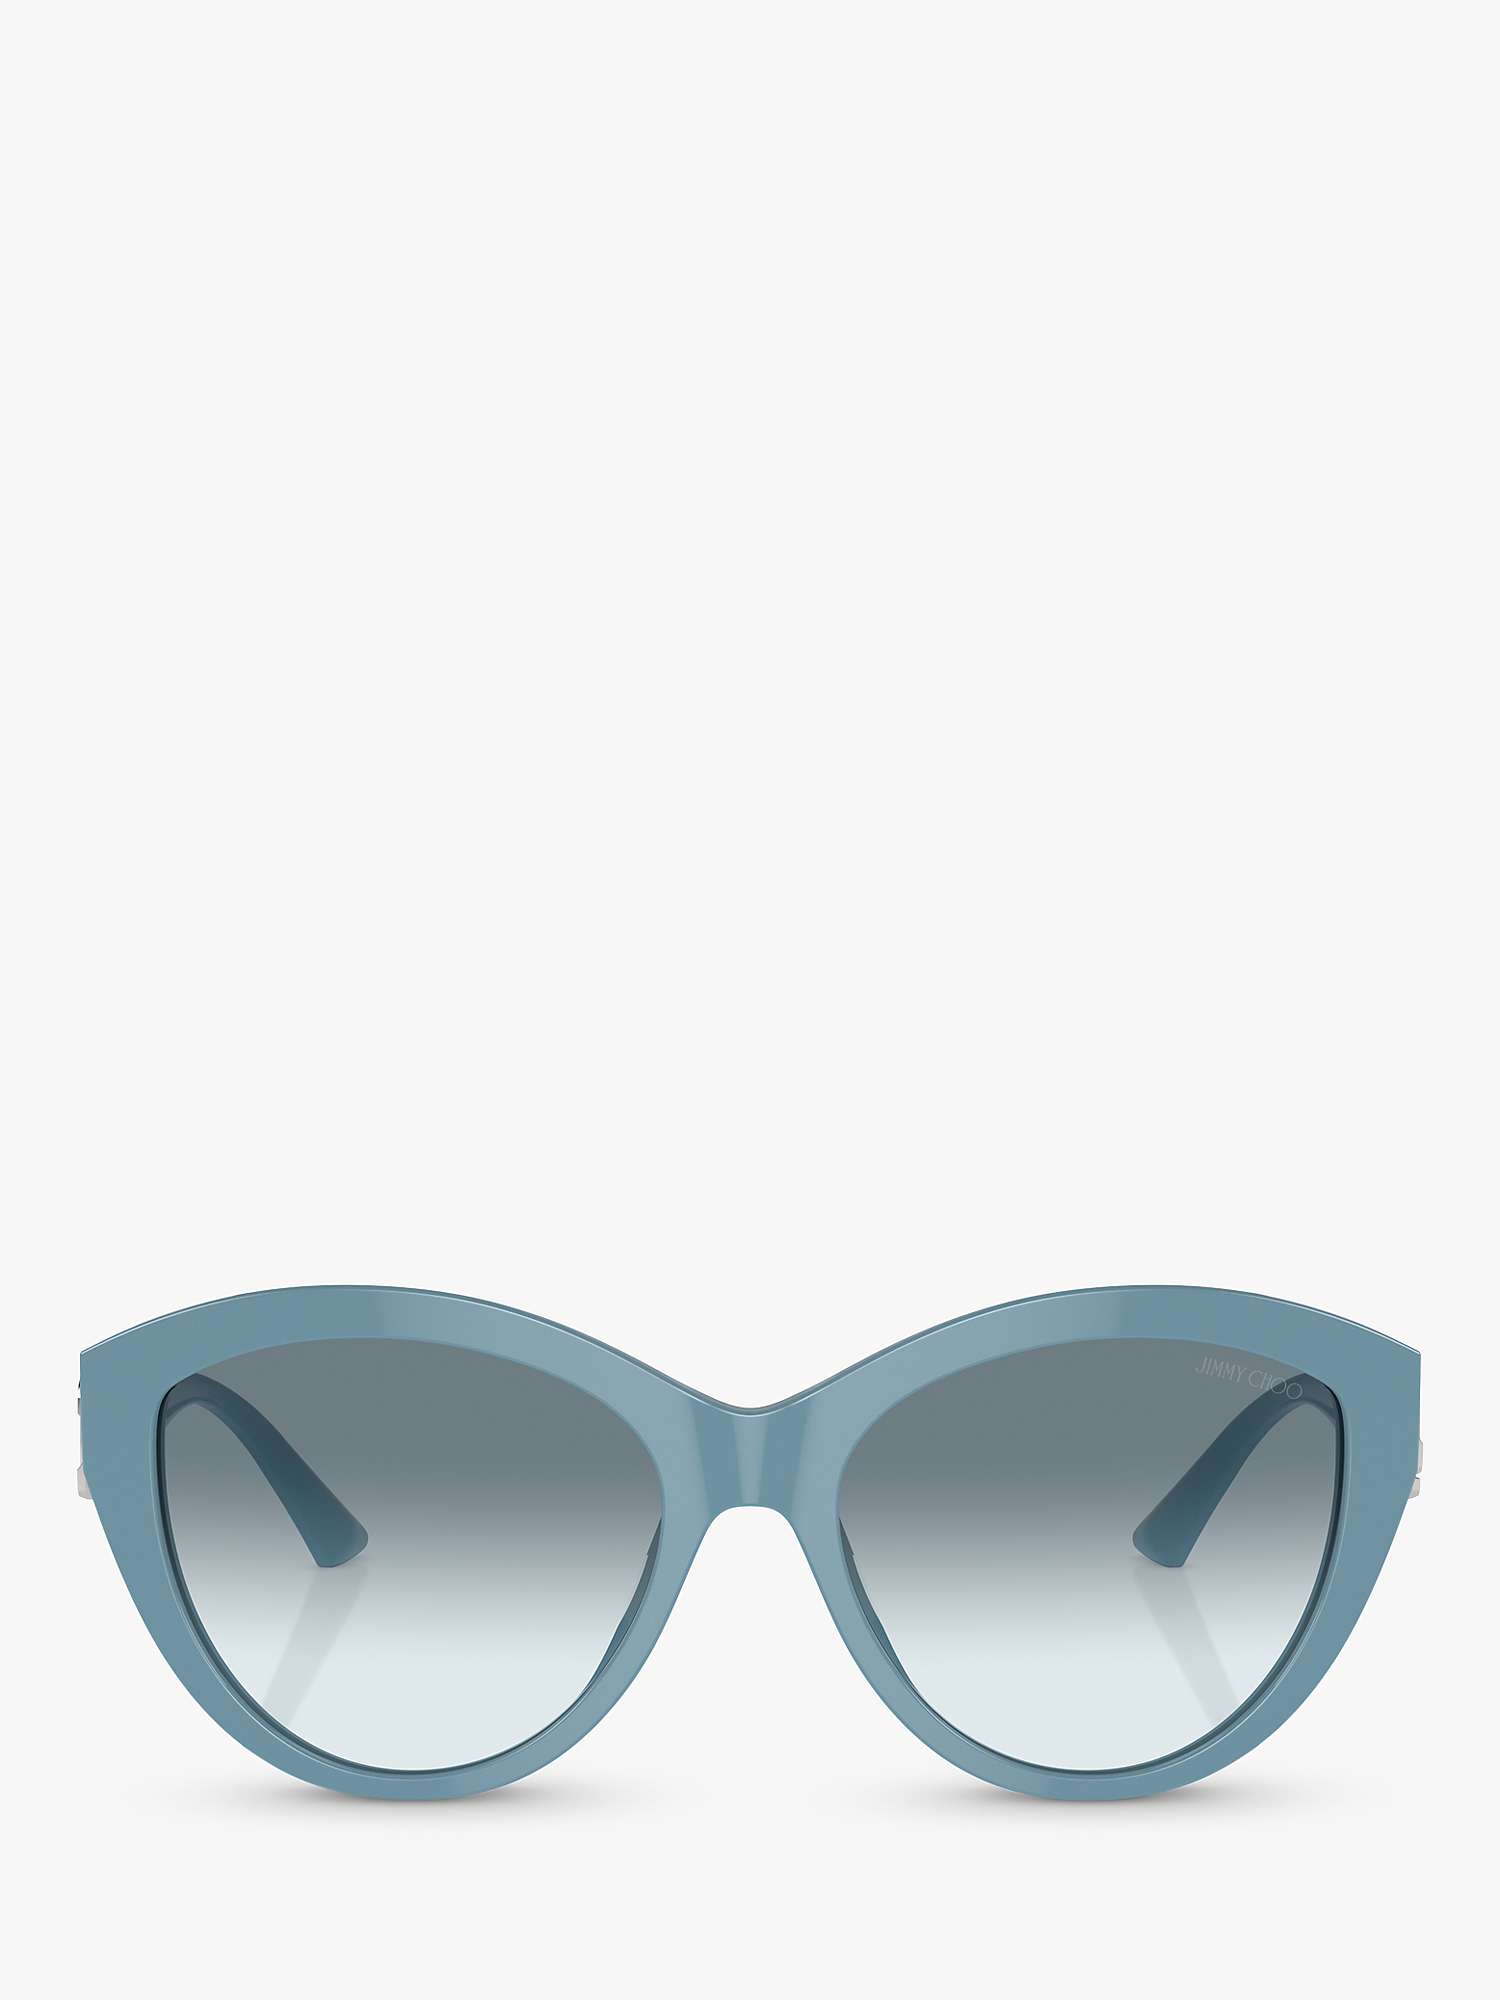 Buy Jimmy Choo JC5007 Women's Cat's Eye Sunglasses, Blue Online at johnlewis.com